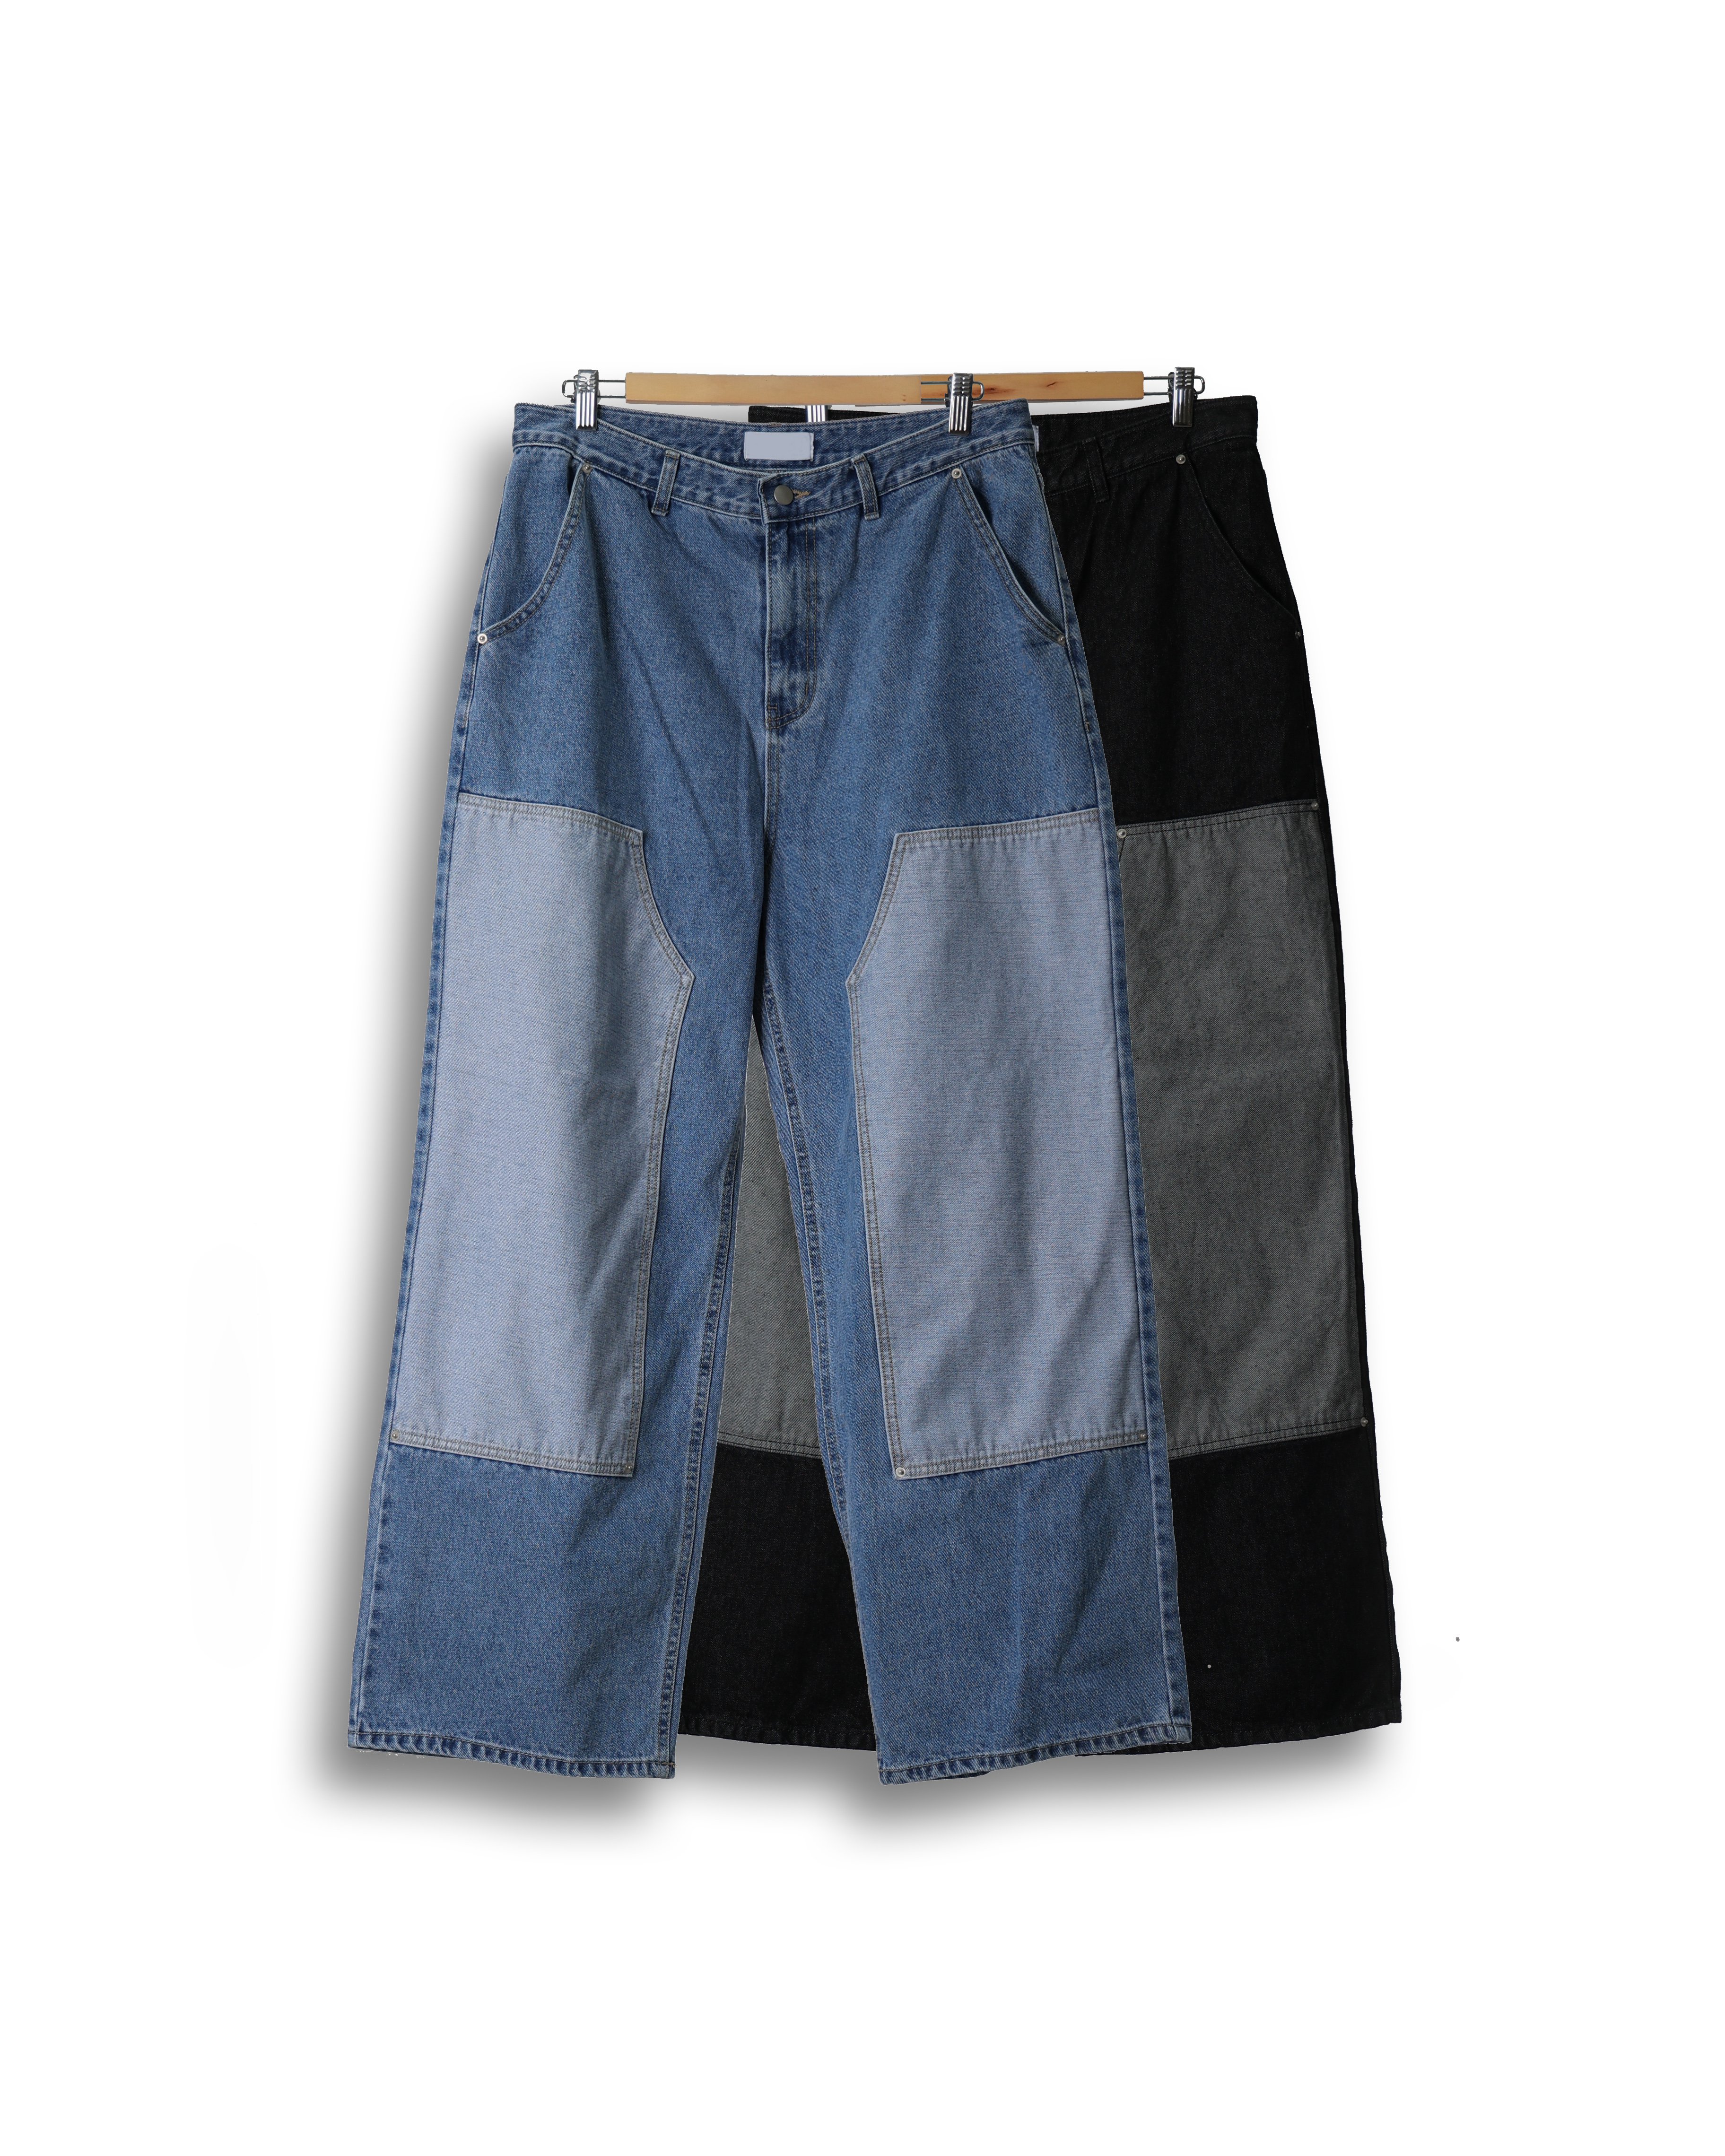 GUUNER Carpenter Double Denim Pants (Black Denim/Blue Denim)